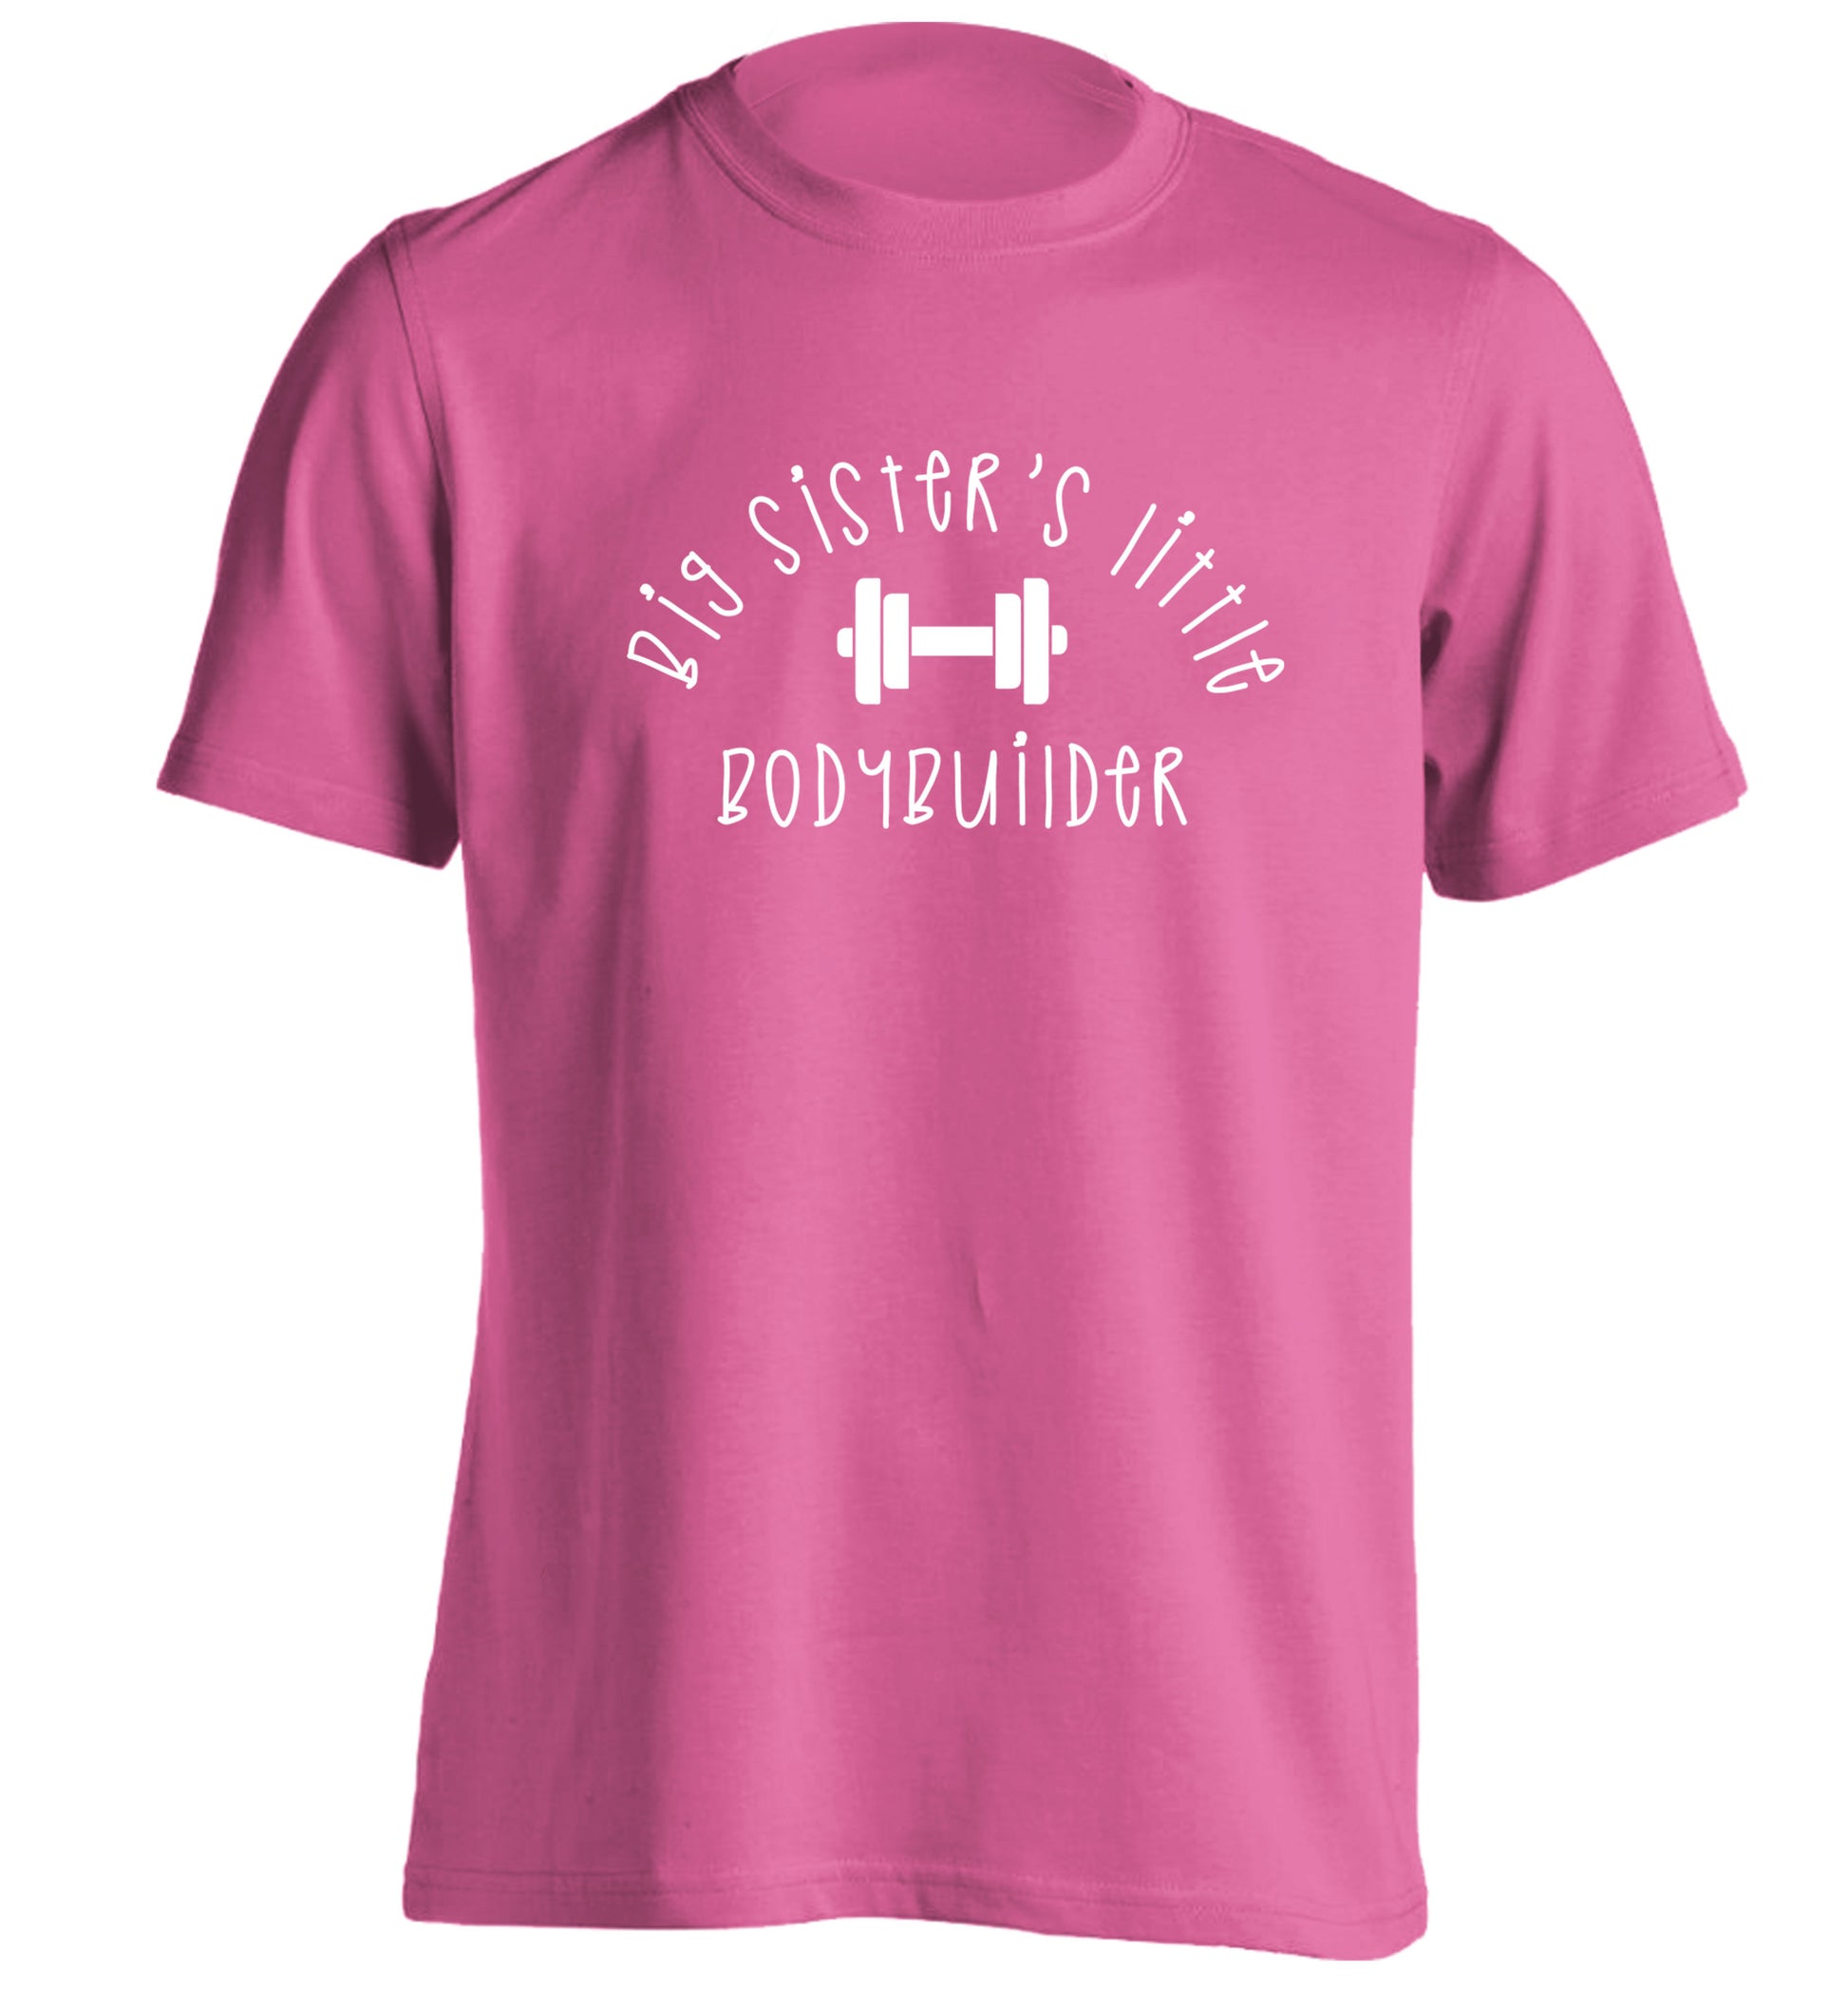 Big sister's little bodybuilder adults unisex pink Tshirt 2XL